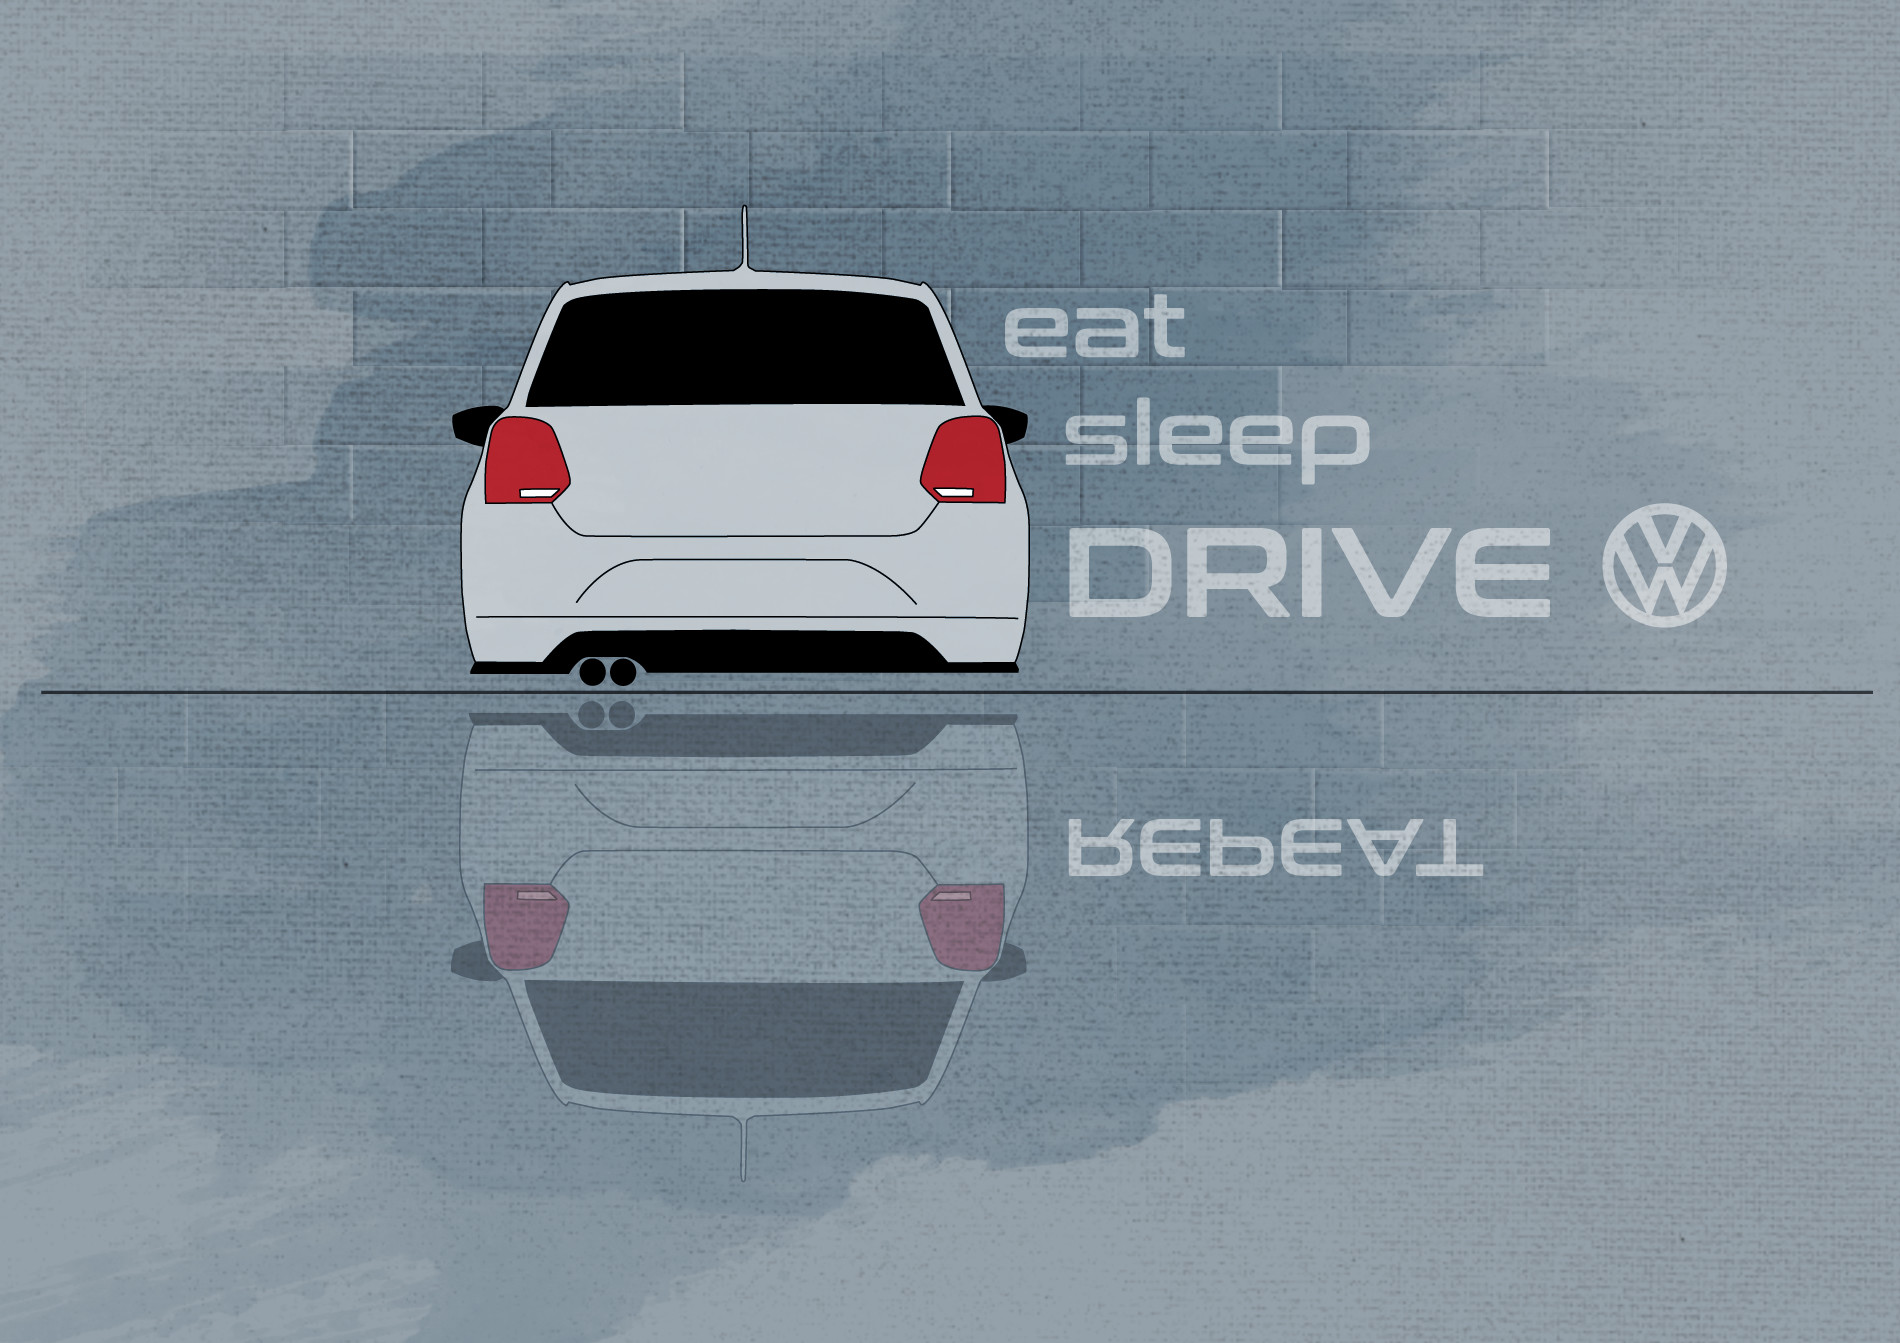 Eat sleep drive repeat